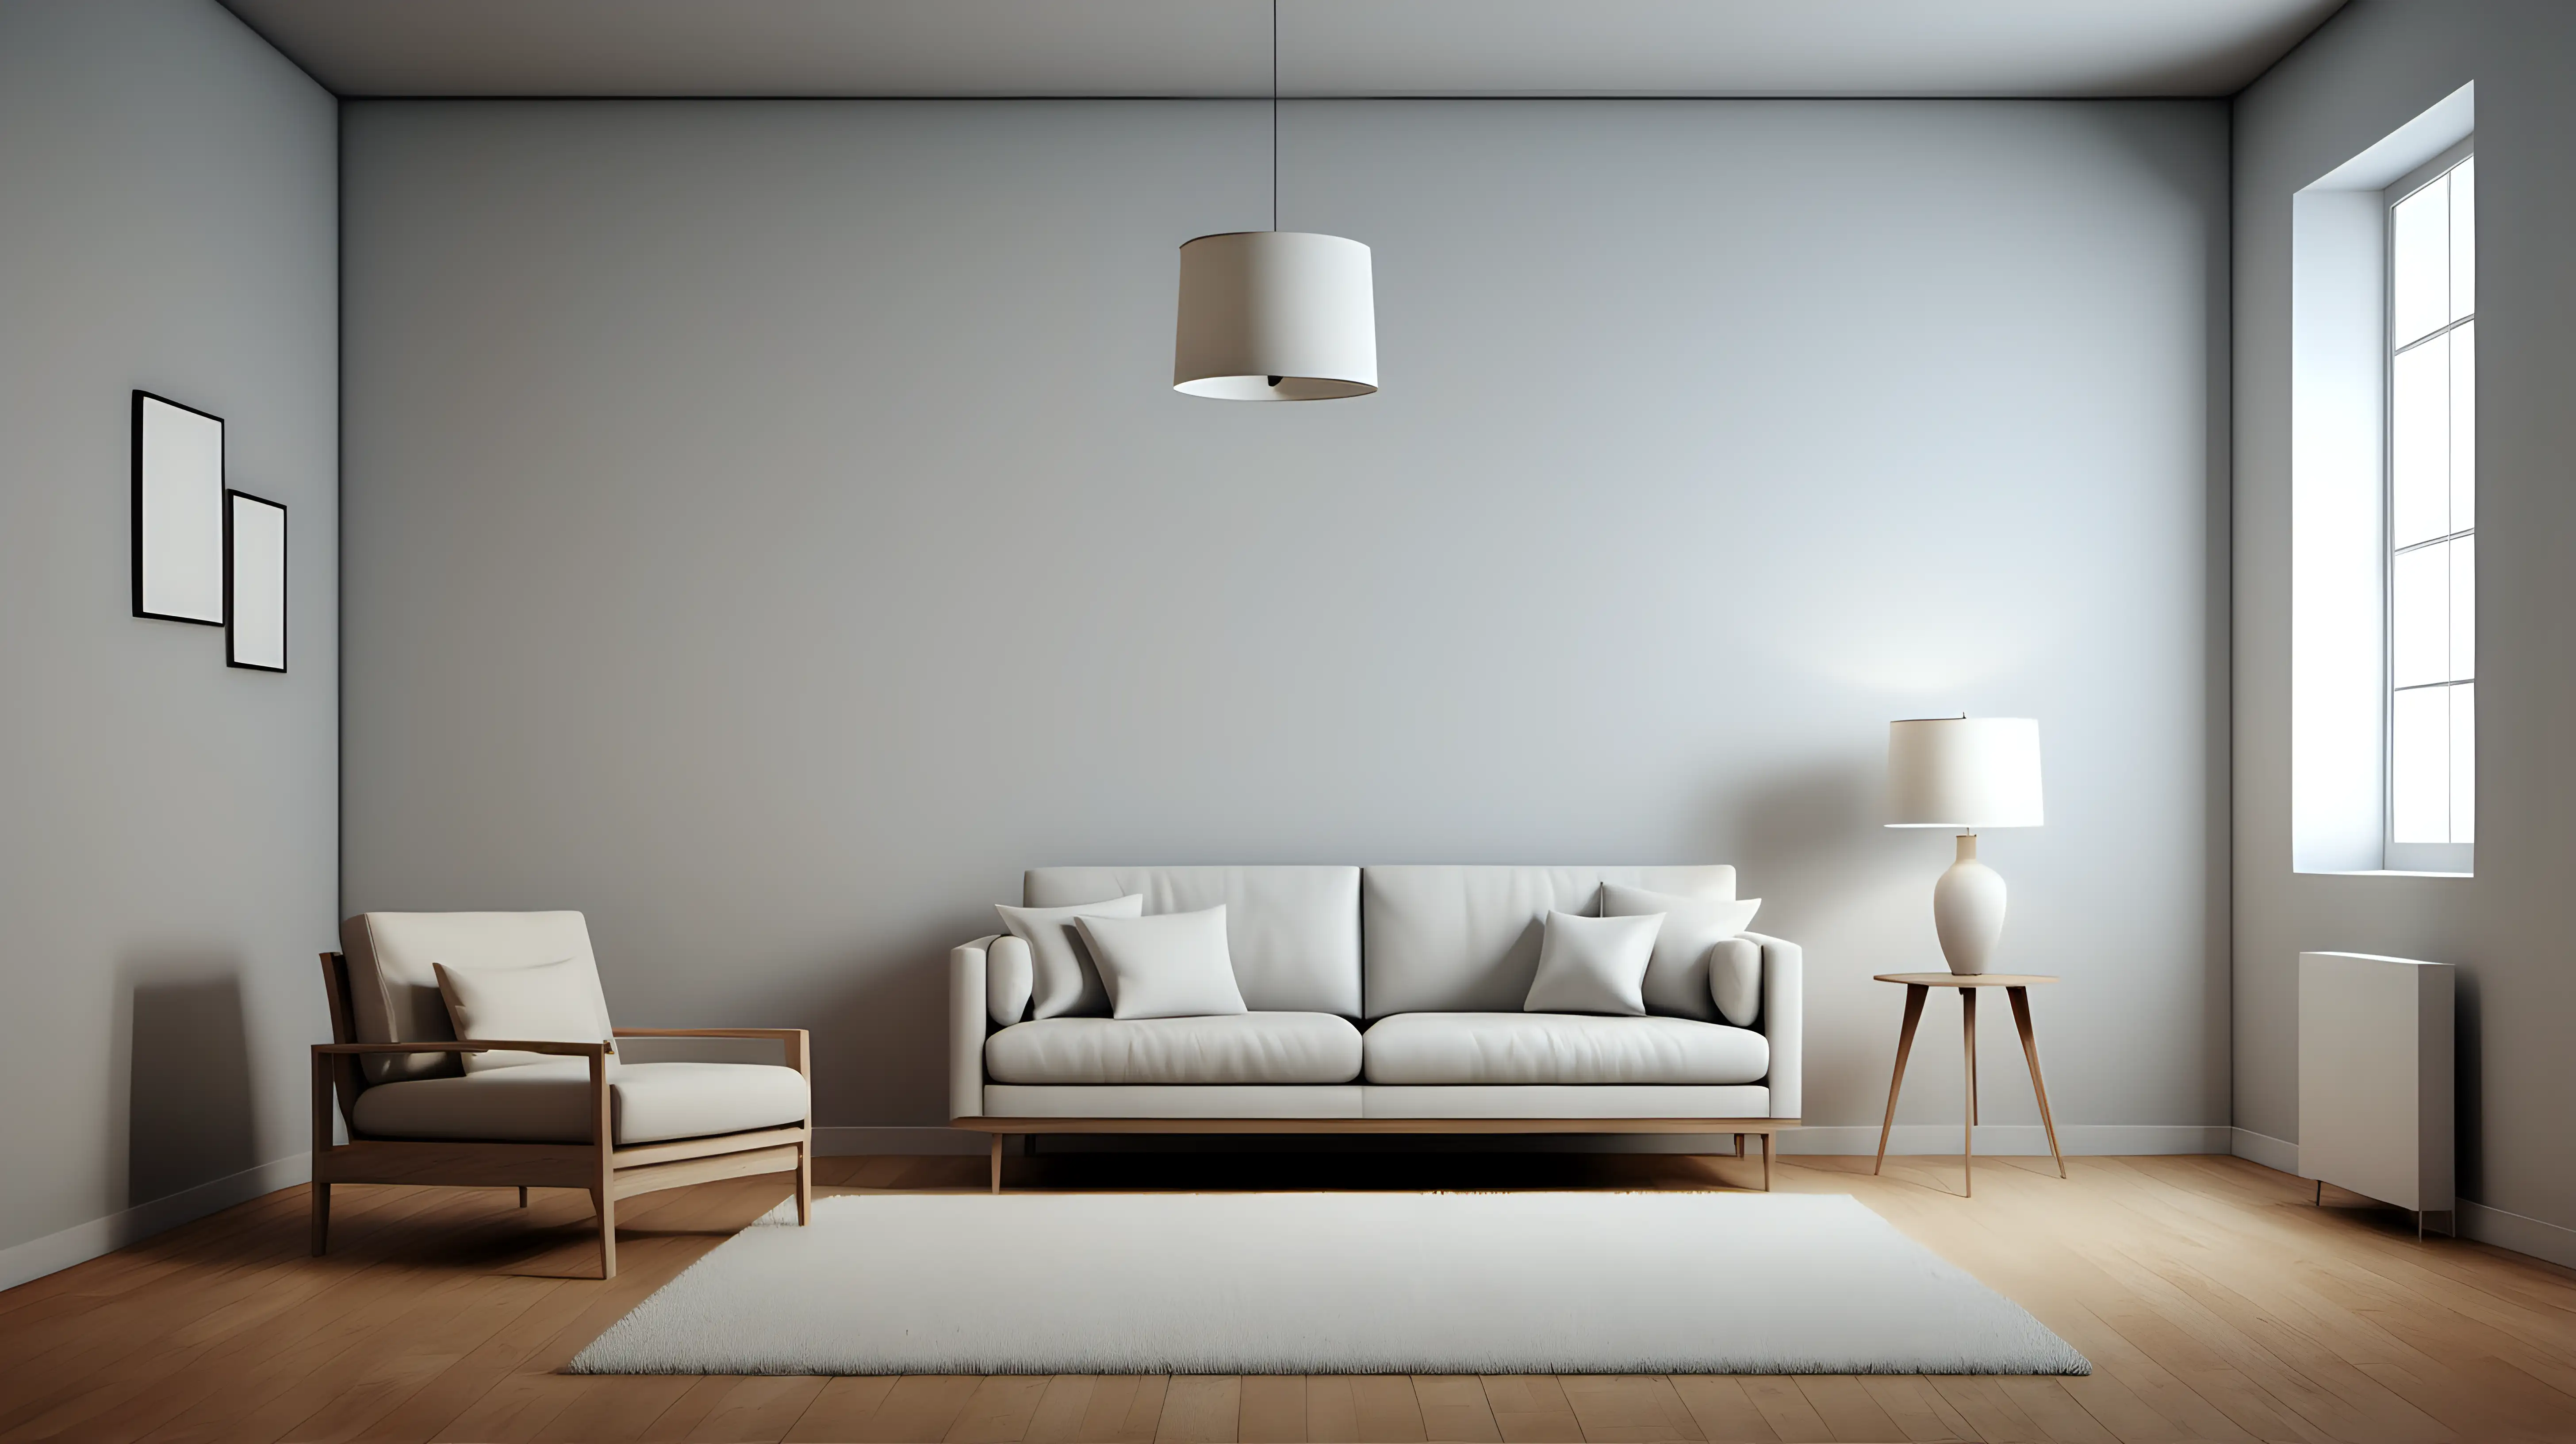 Minimalist Living Room with Chic Furnishings